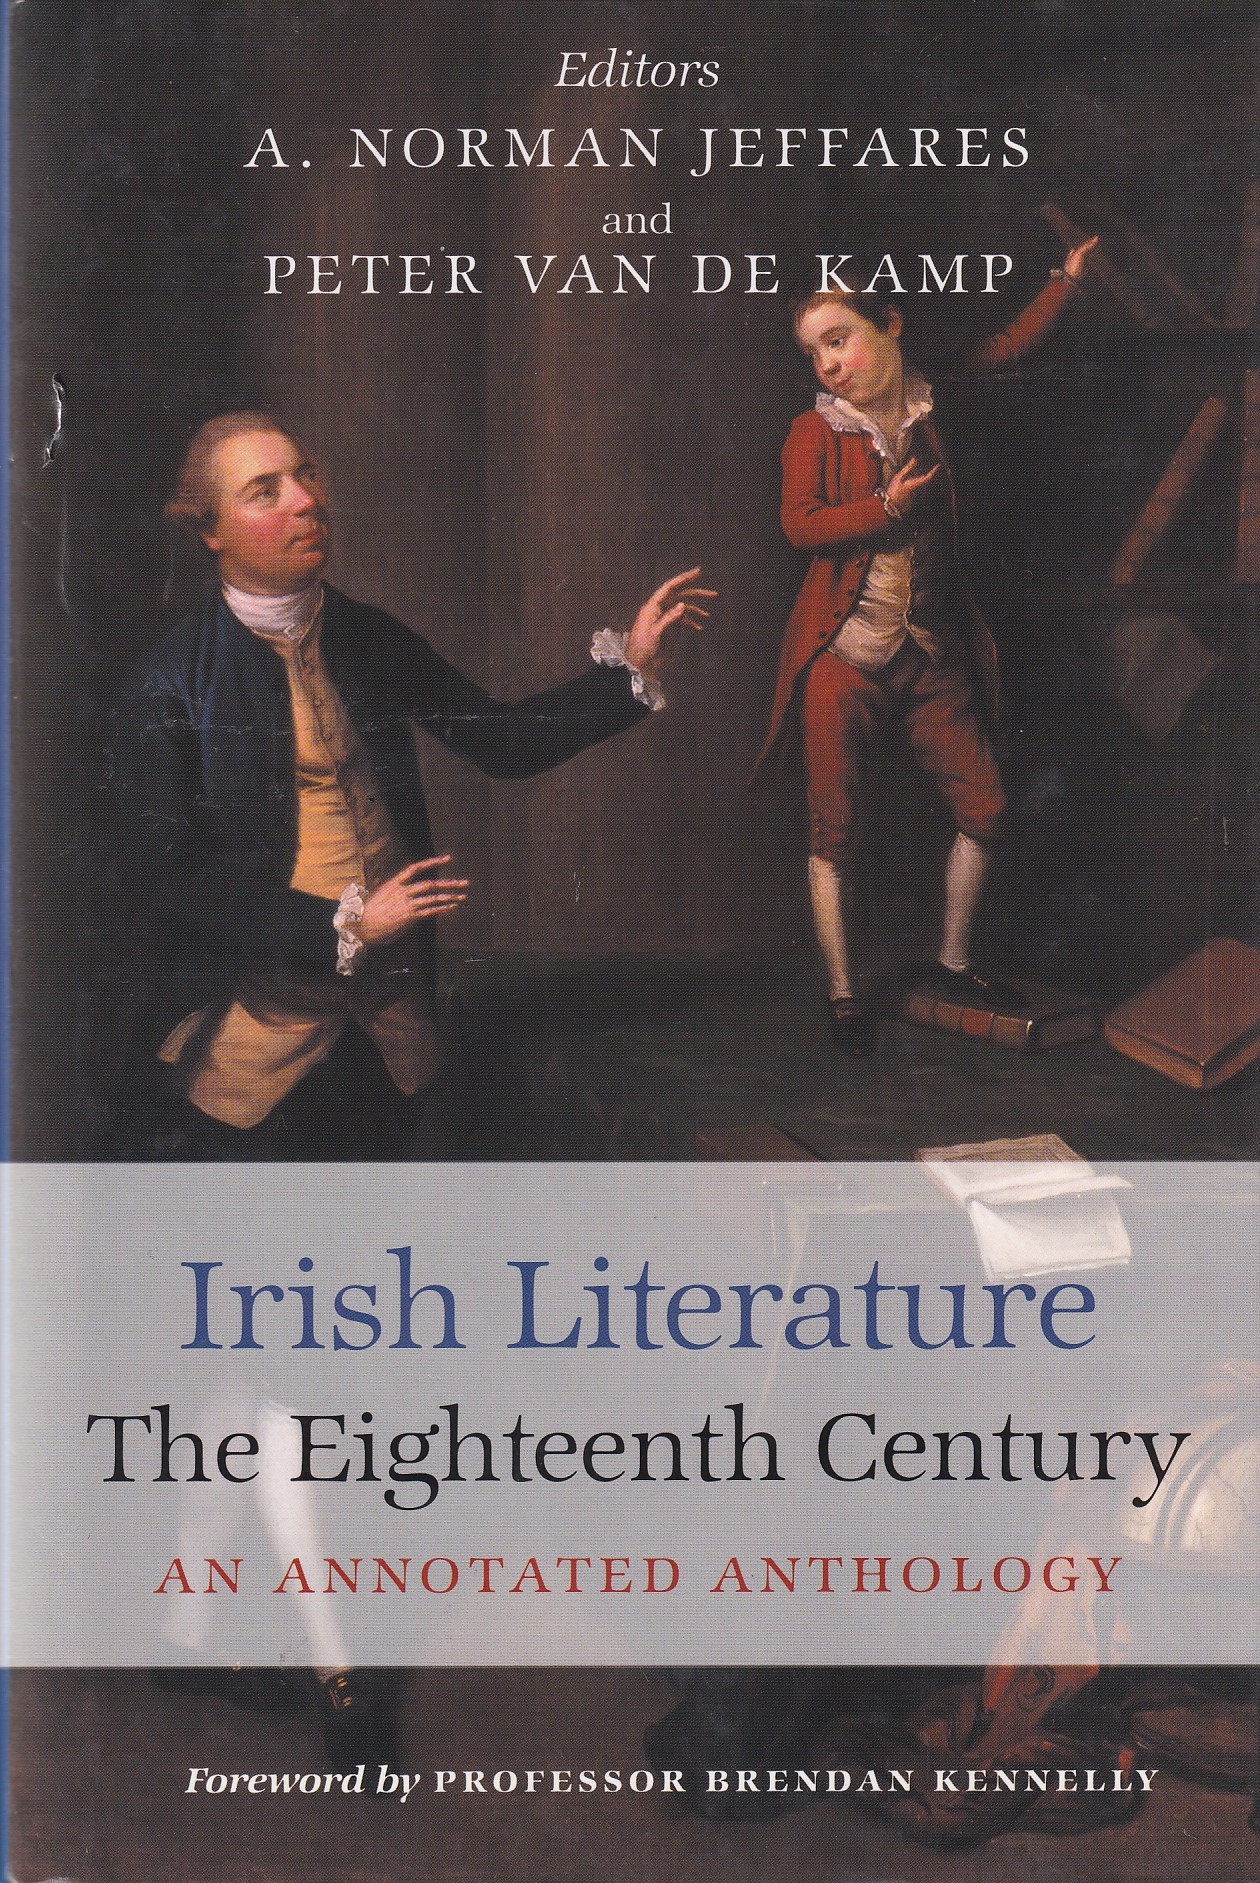 Irish Literature The Eighteenth Century: An Annotated Anthology | Peter Van de Kamp | Charlie Byrne's